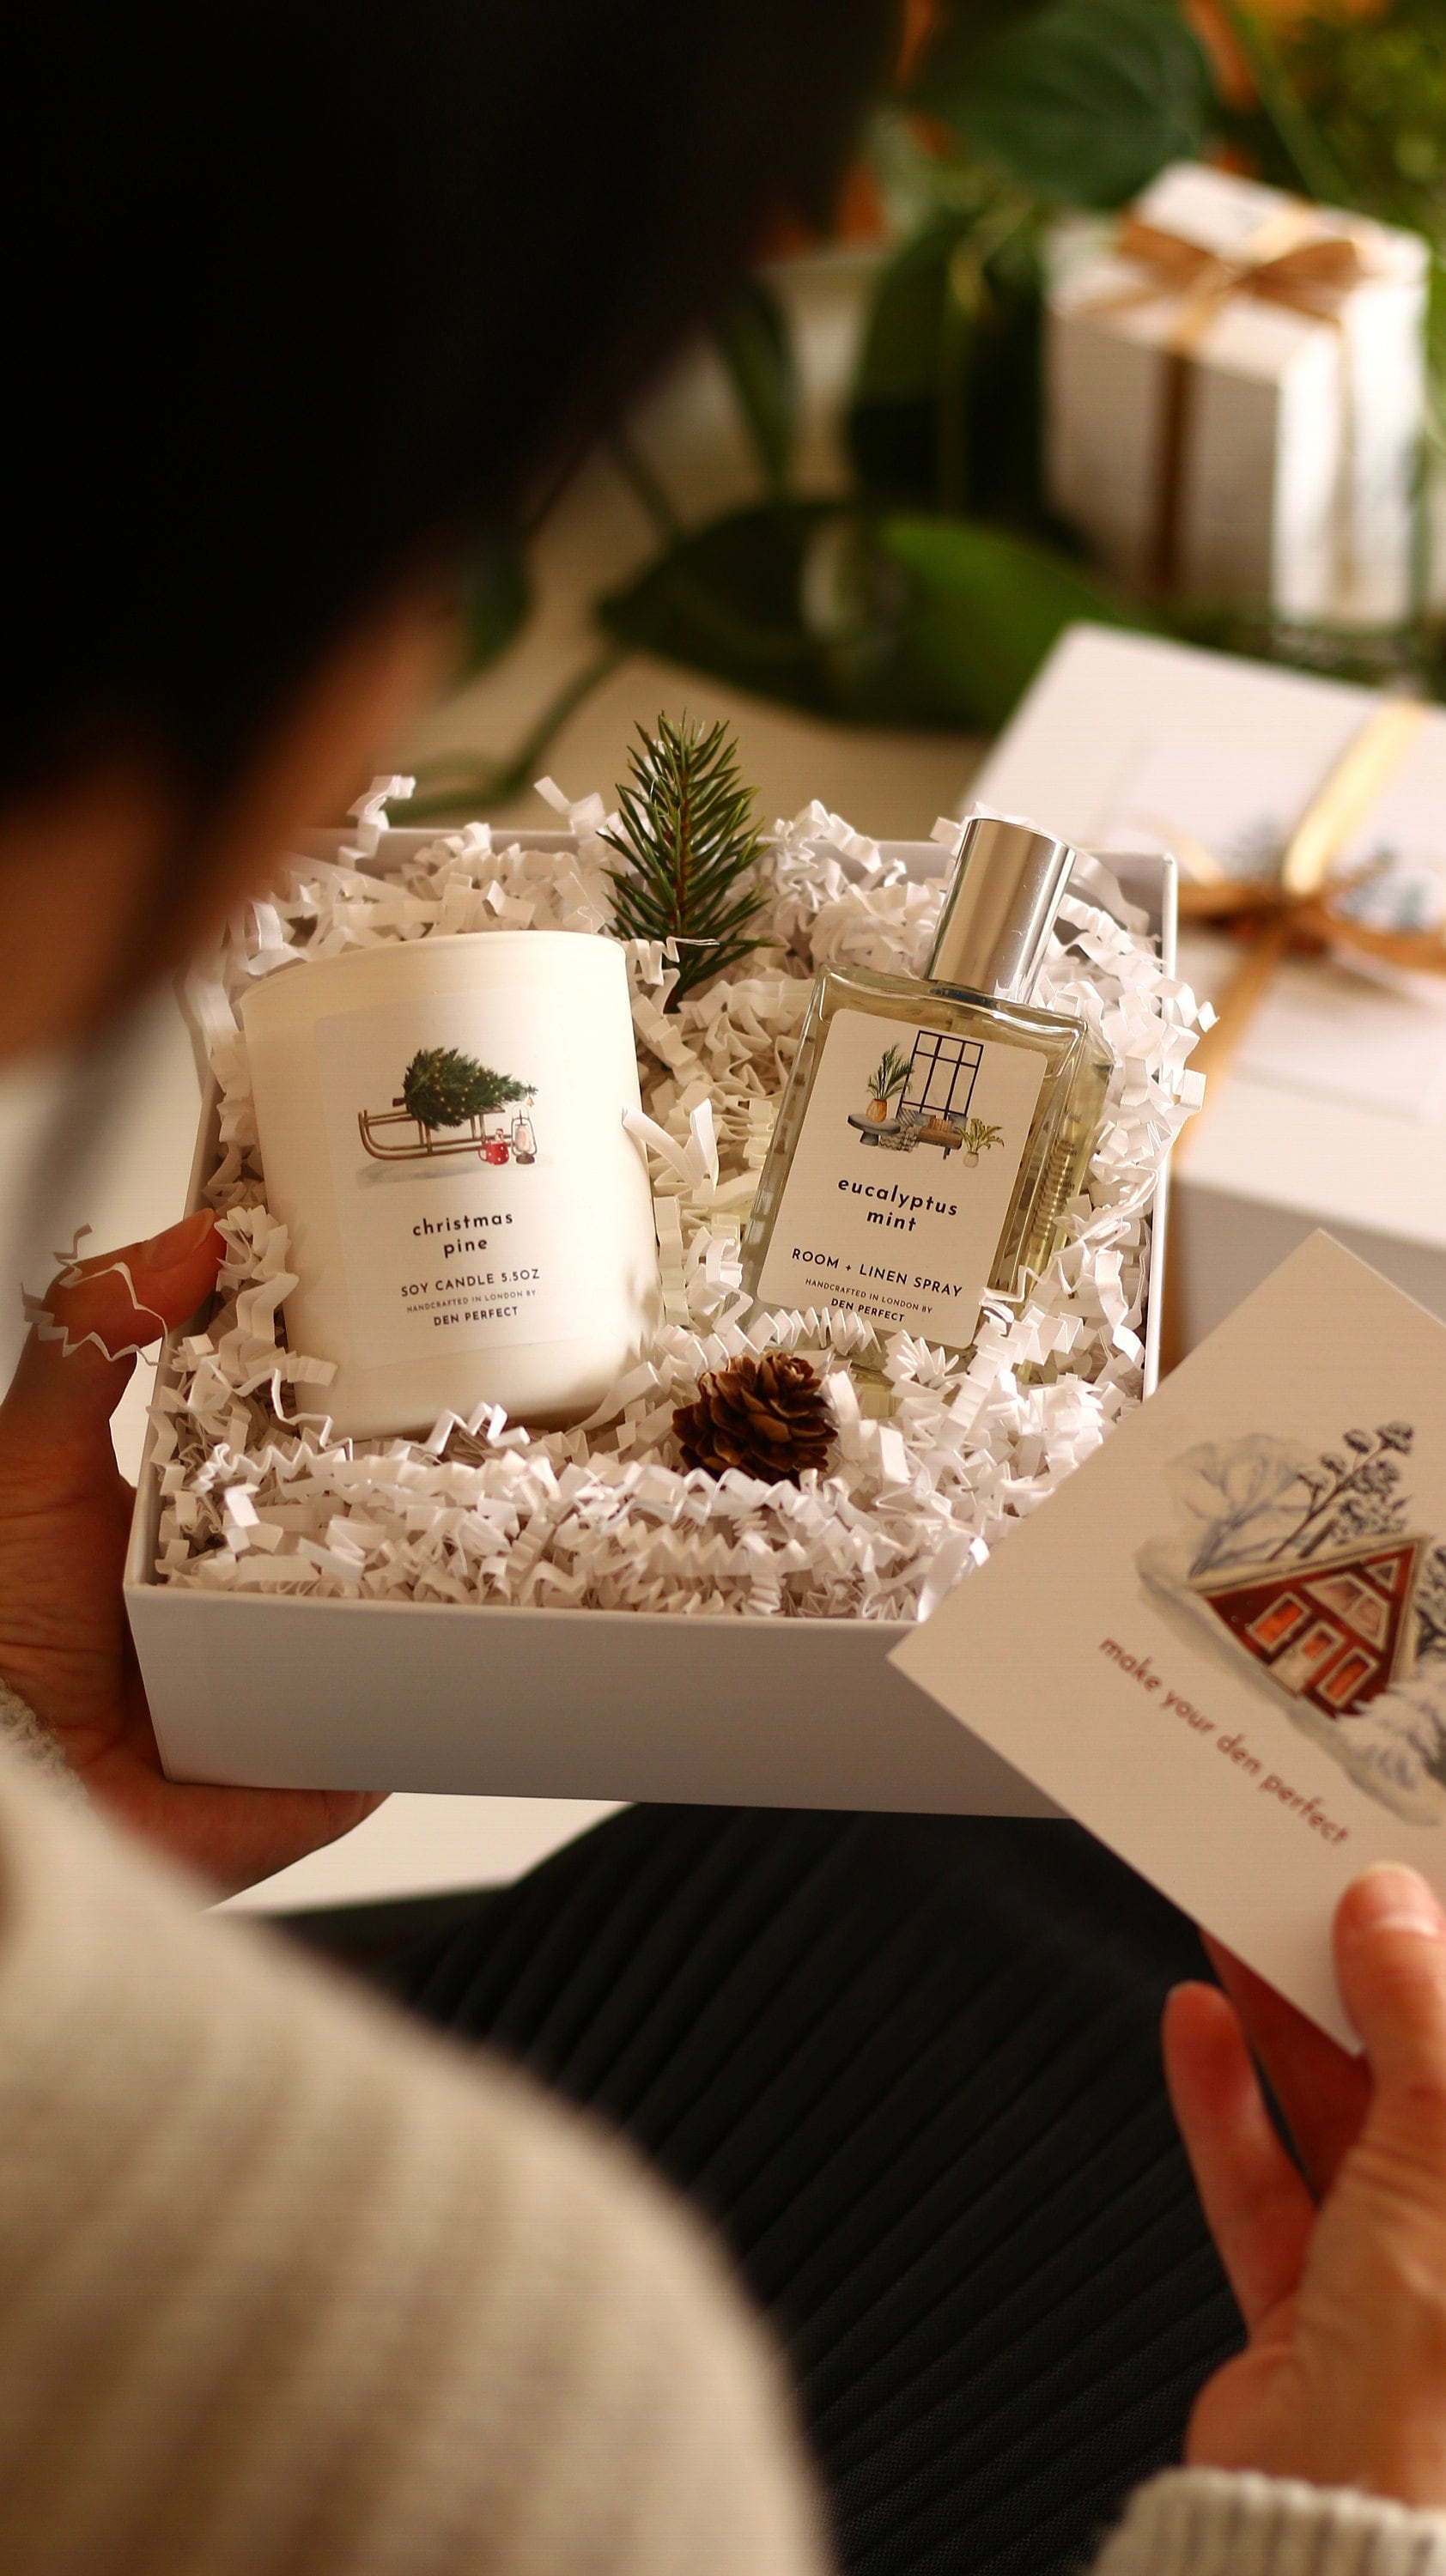 Christmas Pine Gift Set, Soy Candle & Room + Linen Spray Box